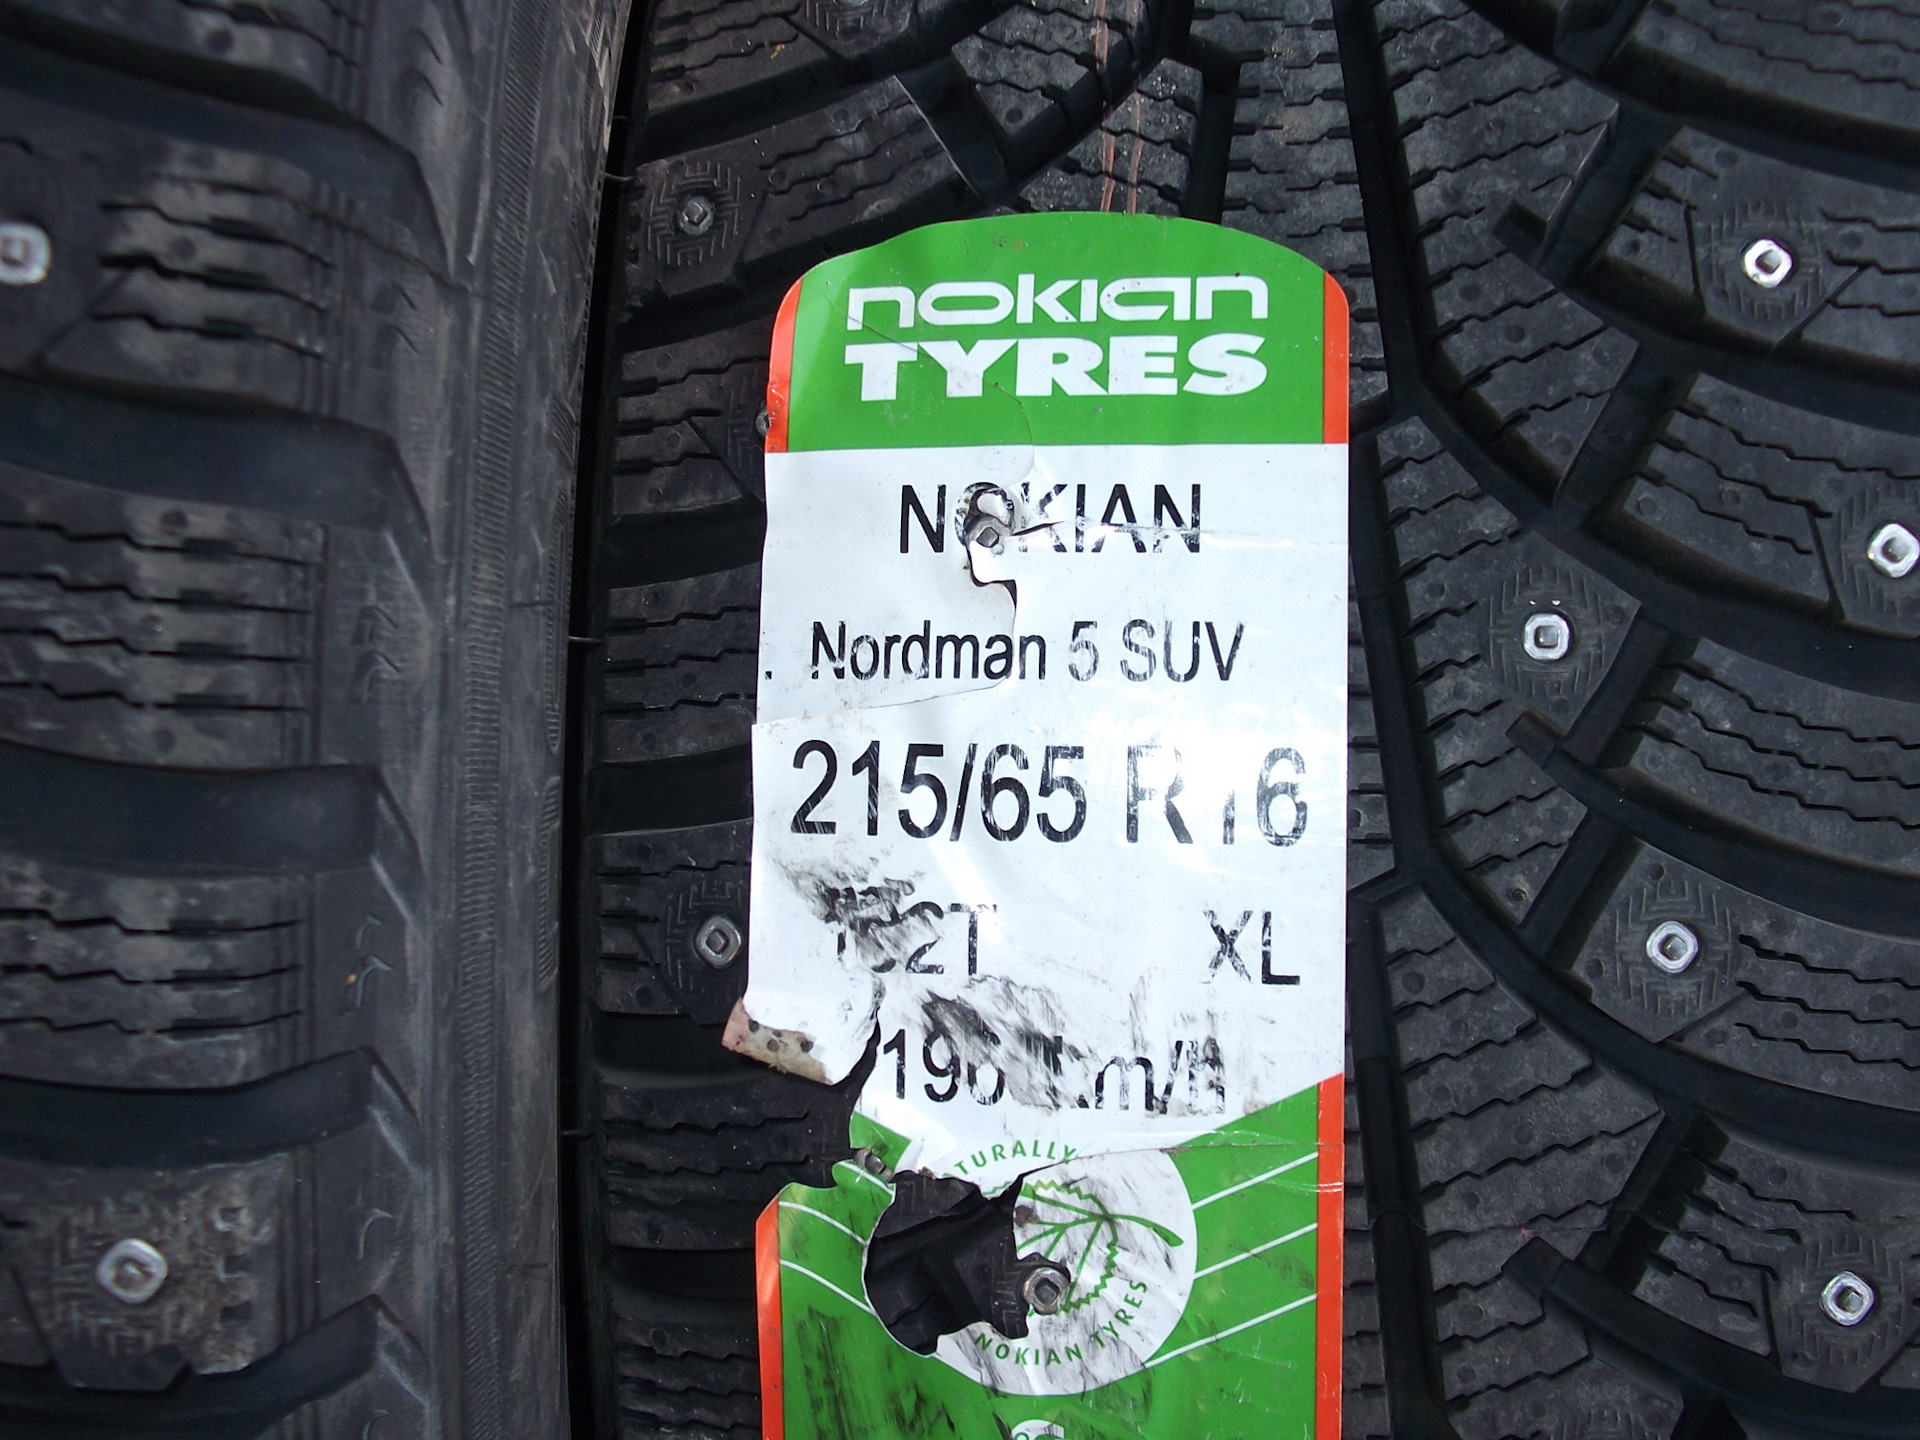 Тест шин nordman. Нордман 5. Nokian Tyres Nordman 5 SUV. Нокиан Нордман 7. Nordman 5 шины.